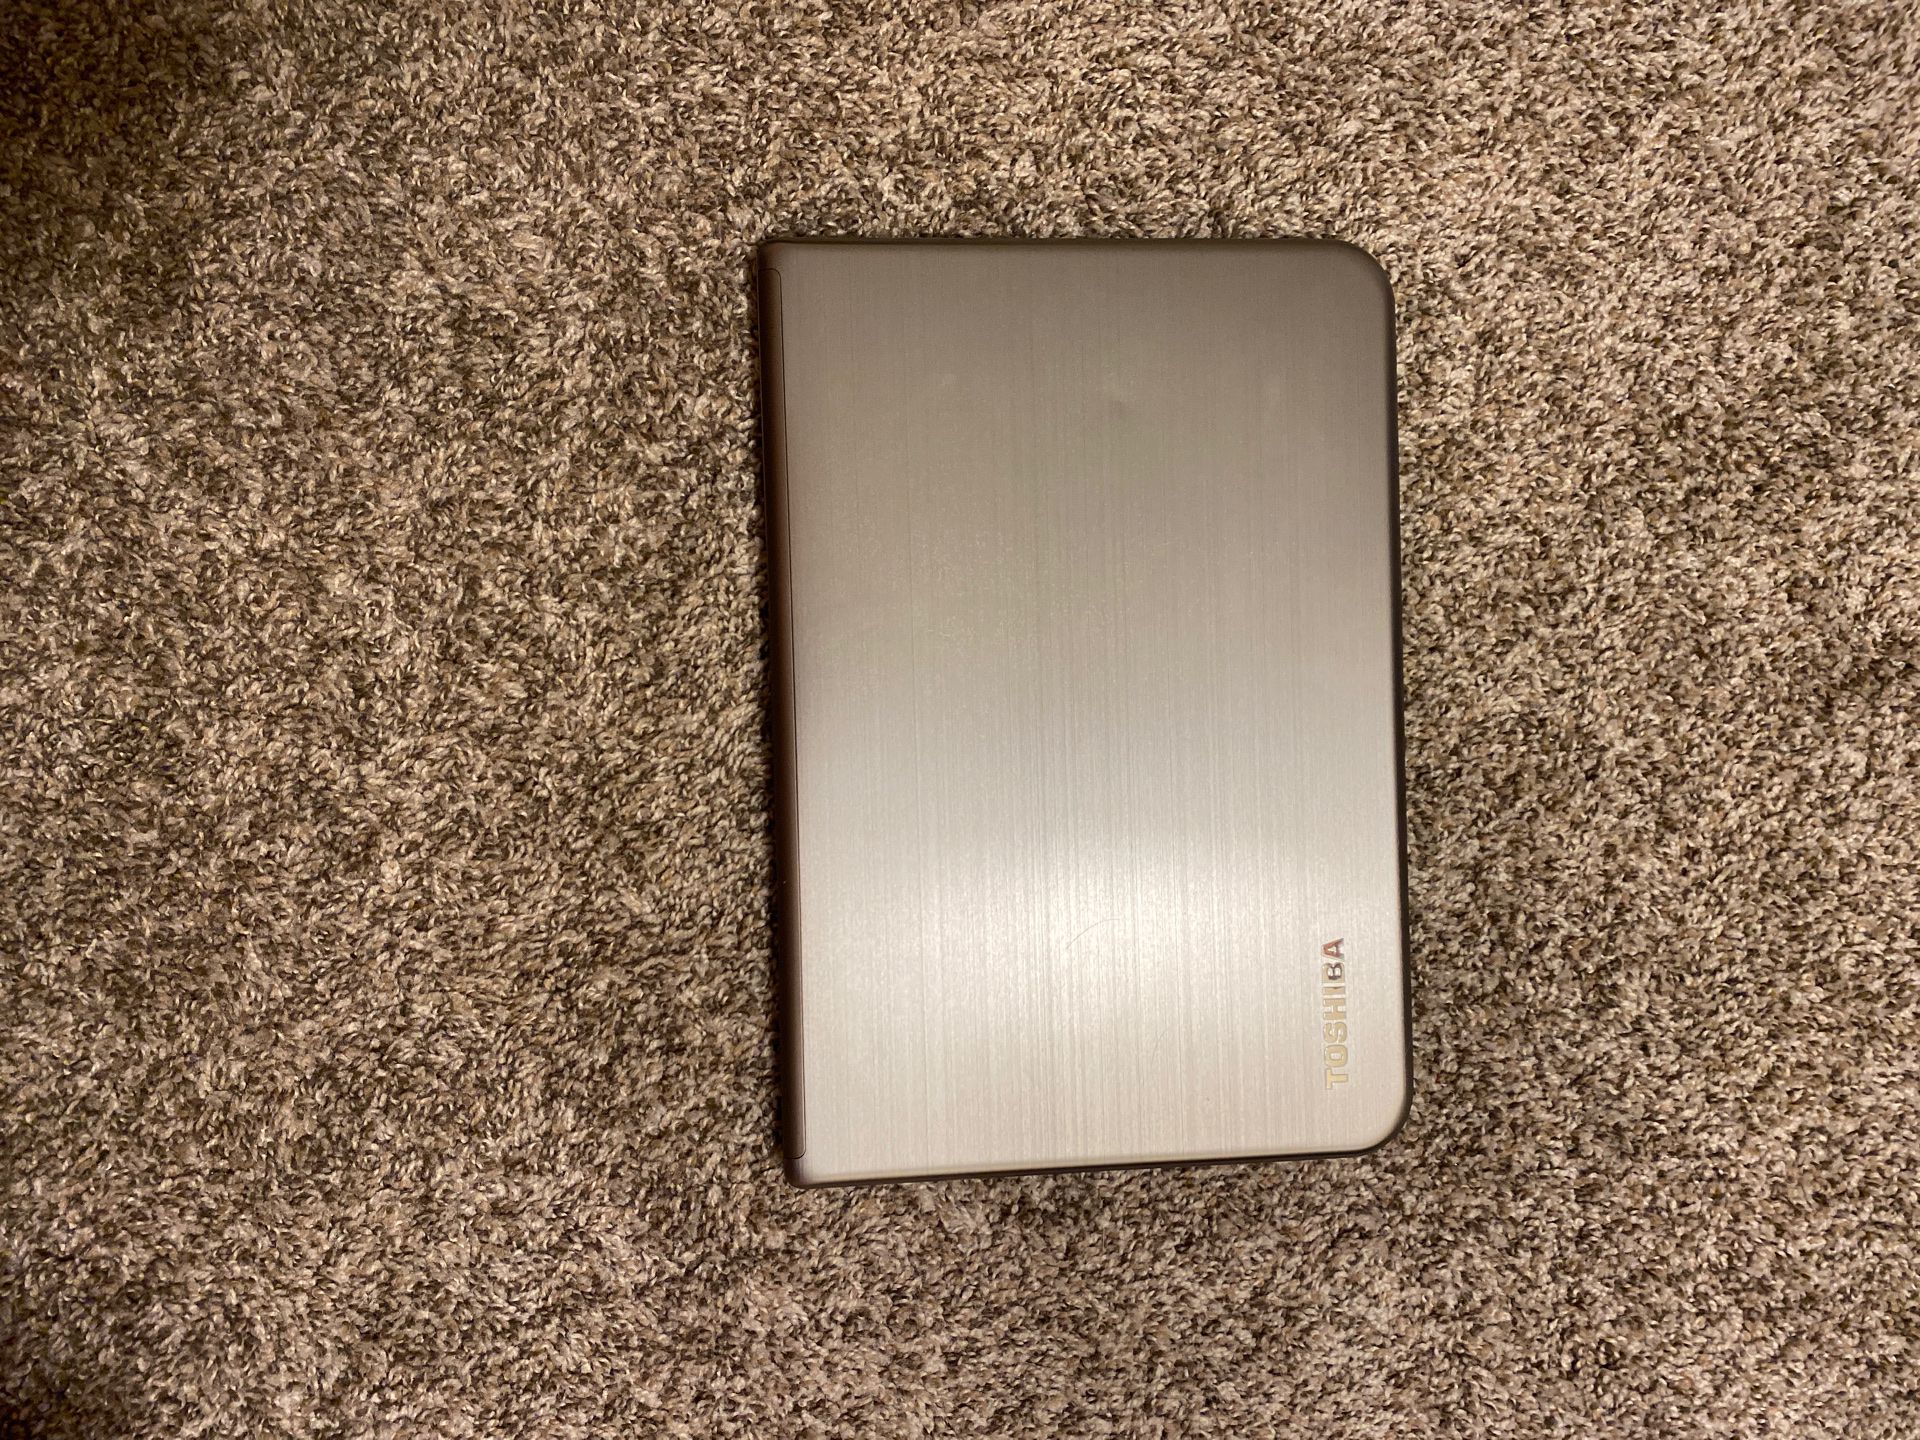 Toshiba Laptop (Barely Used)